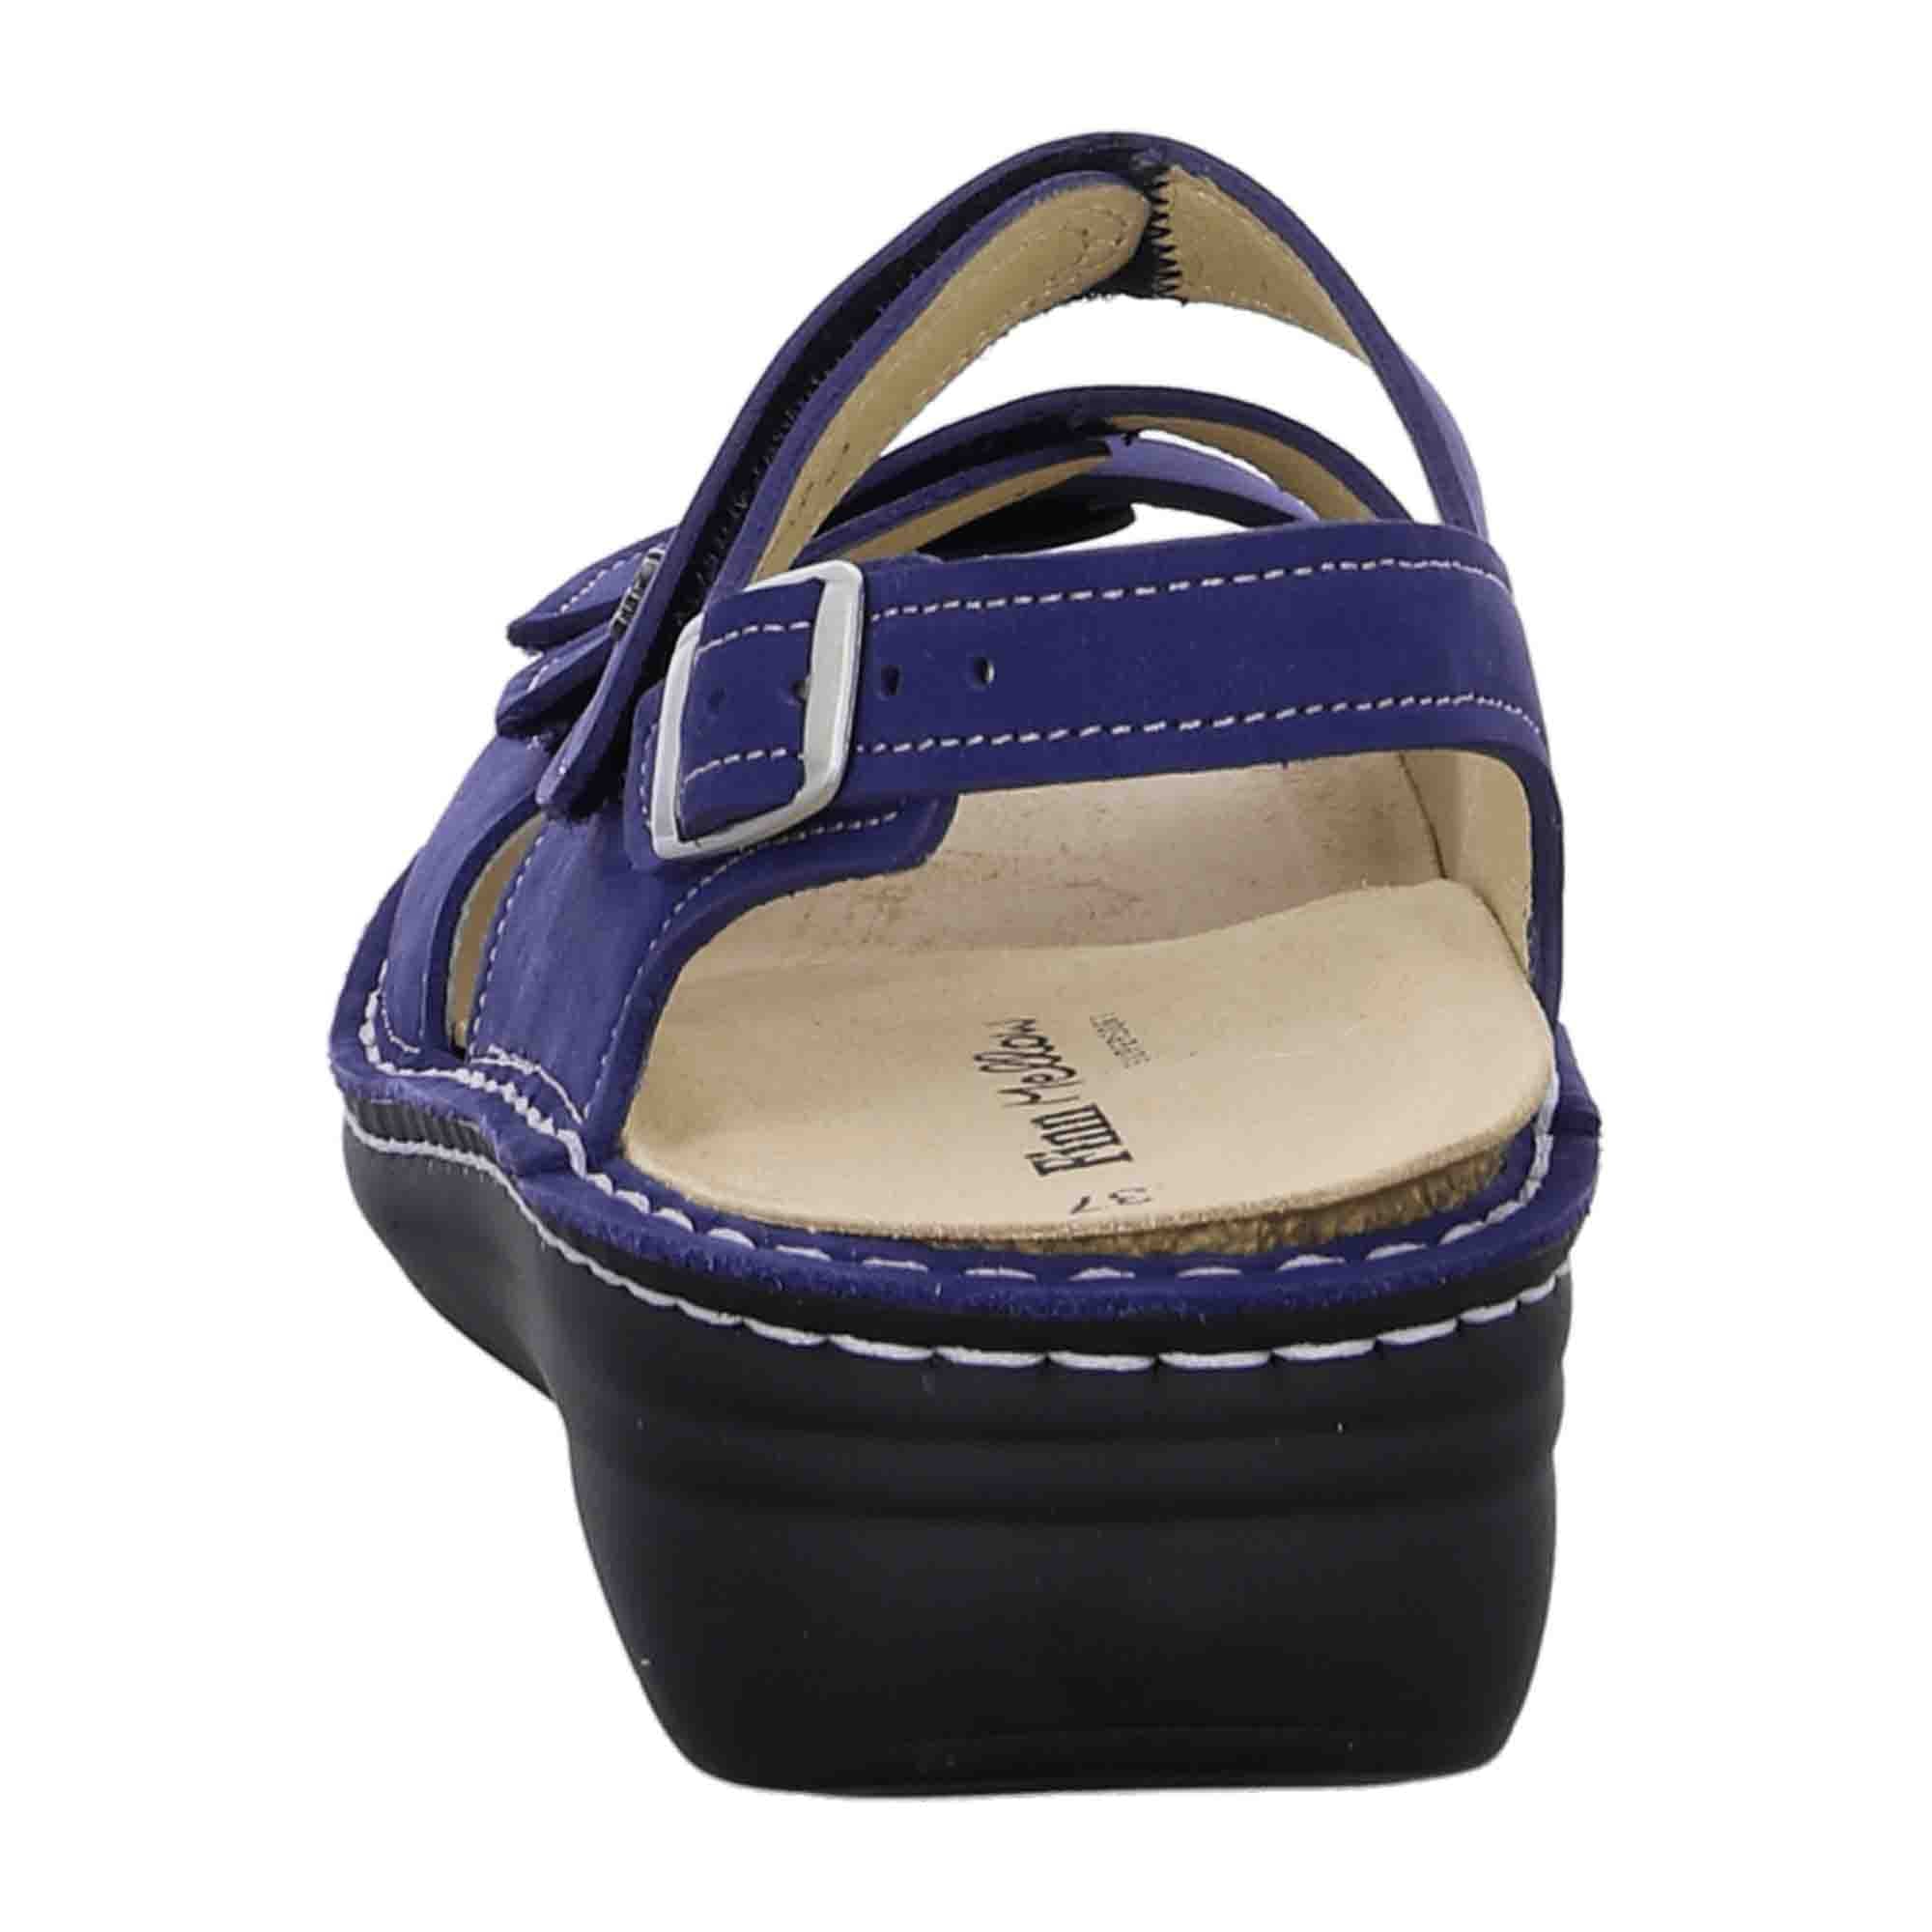 Finn Comfort Praia Women's Comfort Sandals, Stylish Blue